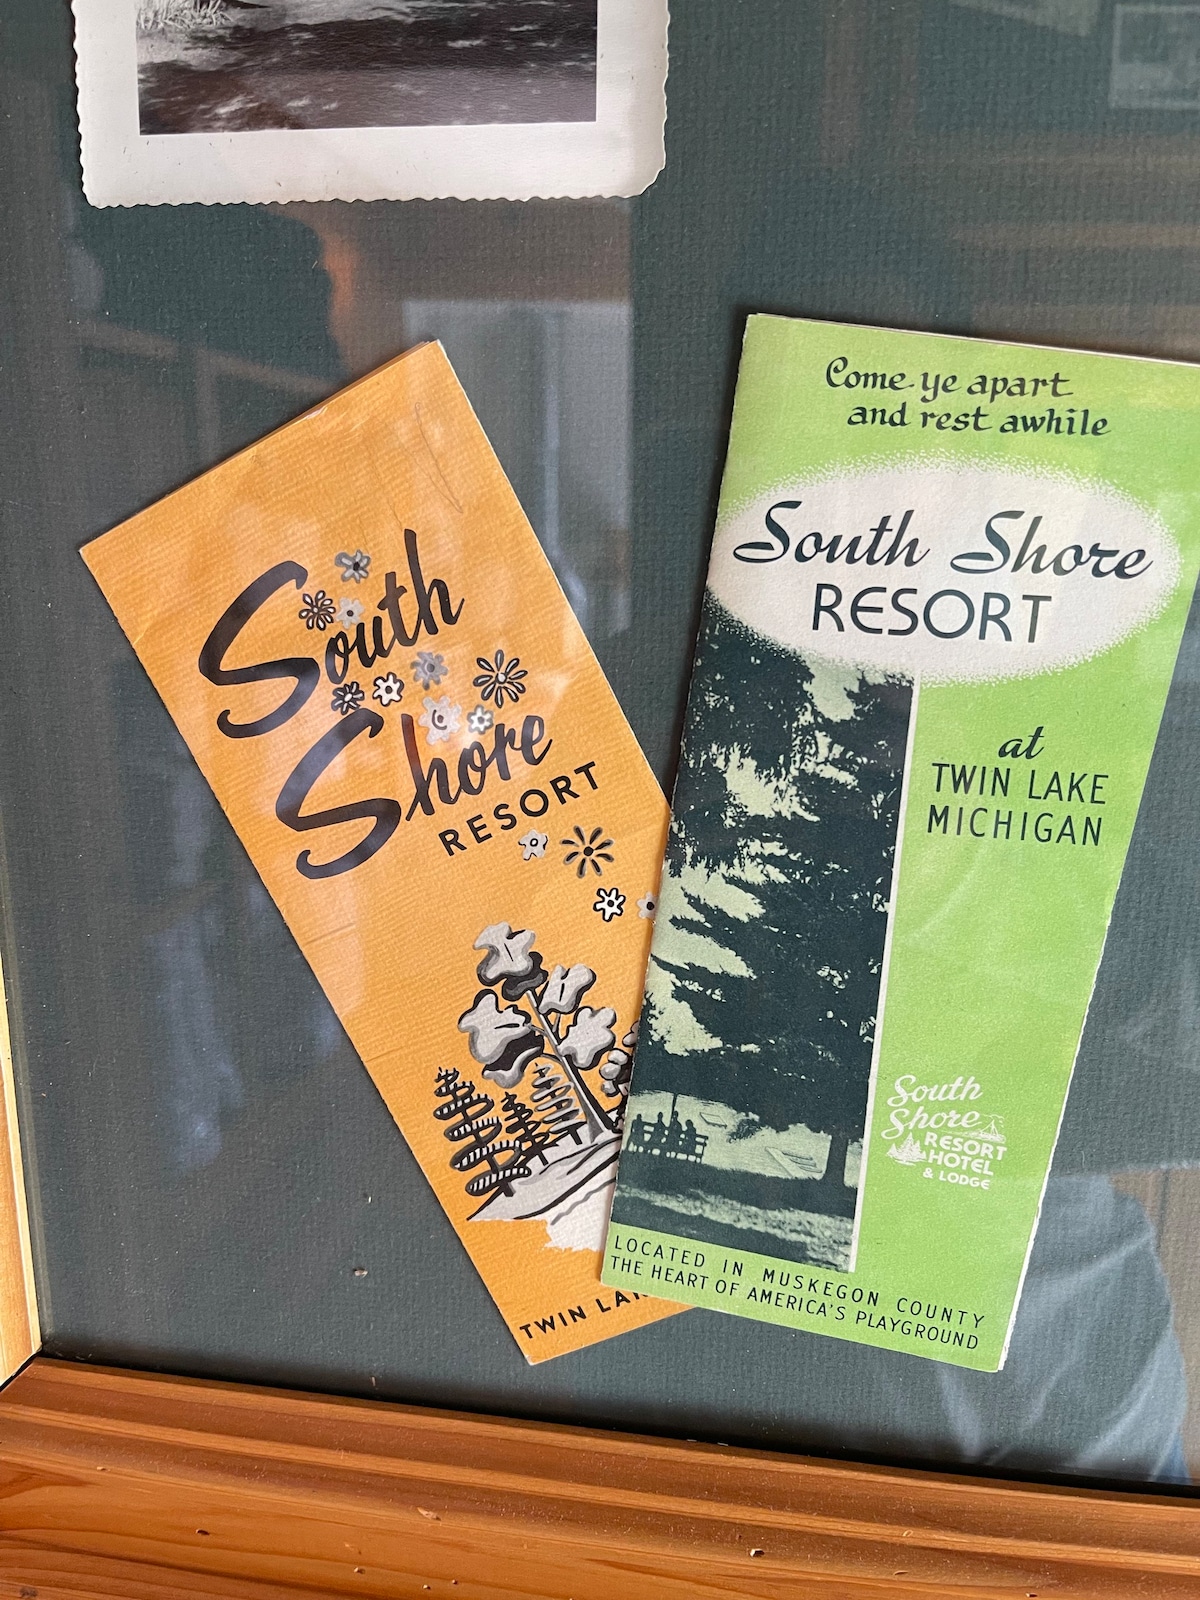 South Shore Resort - The Eagle